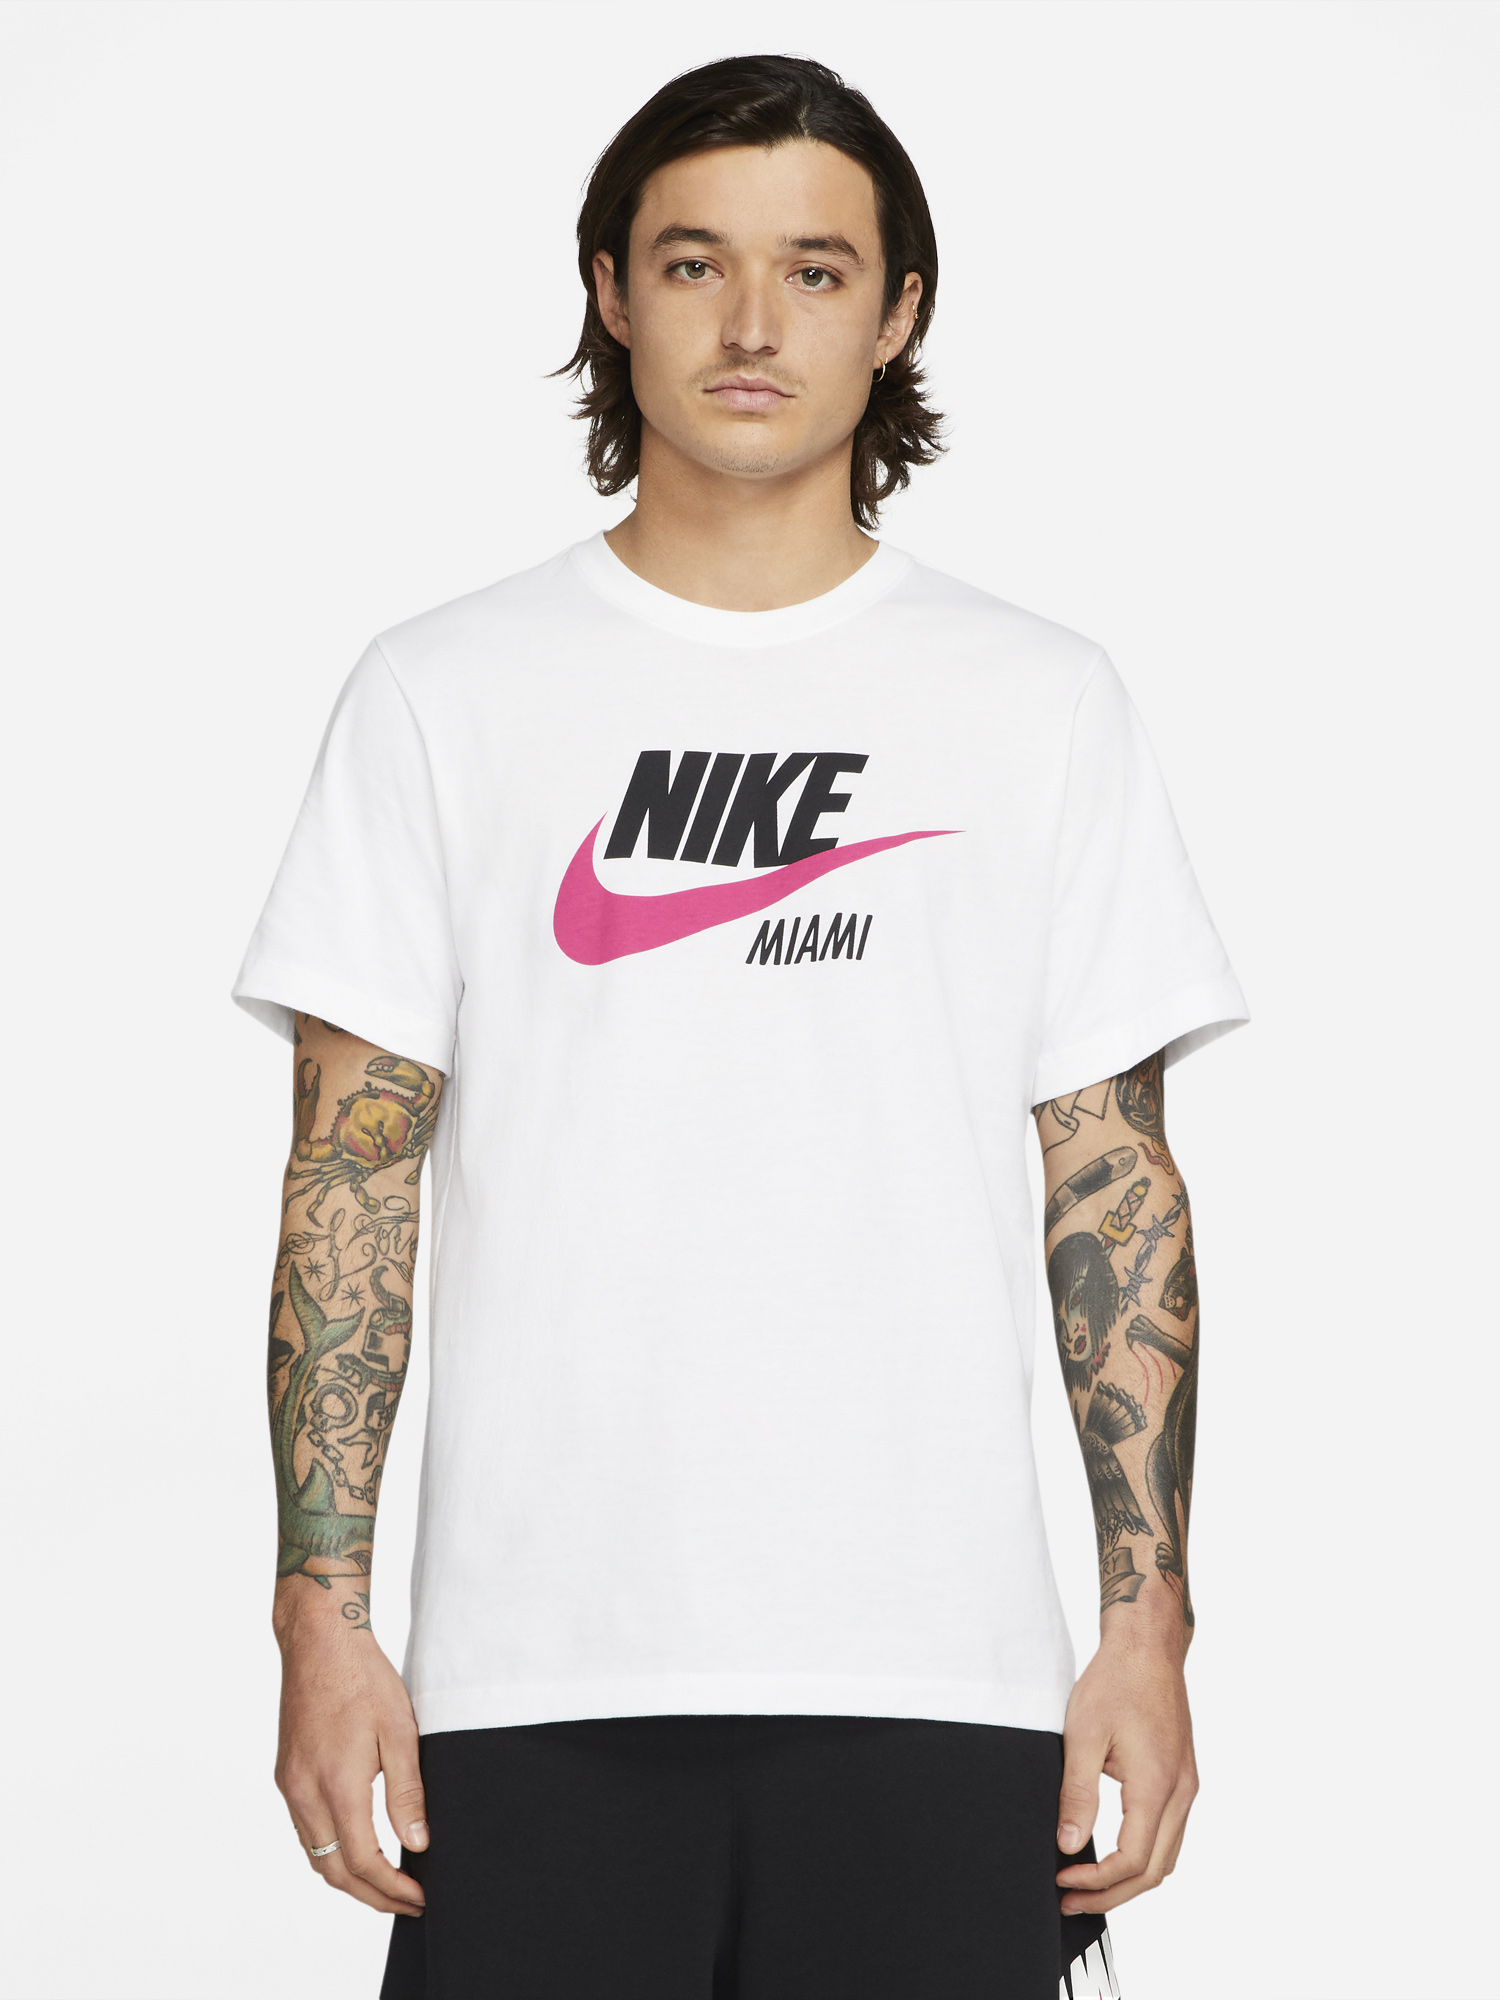 Nike LeBron 8 South Beach Shirts Clothing Outfits to Match